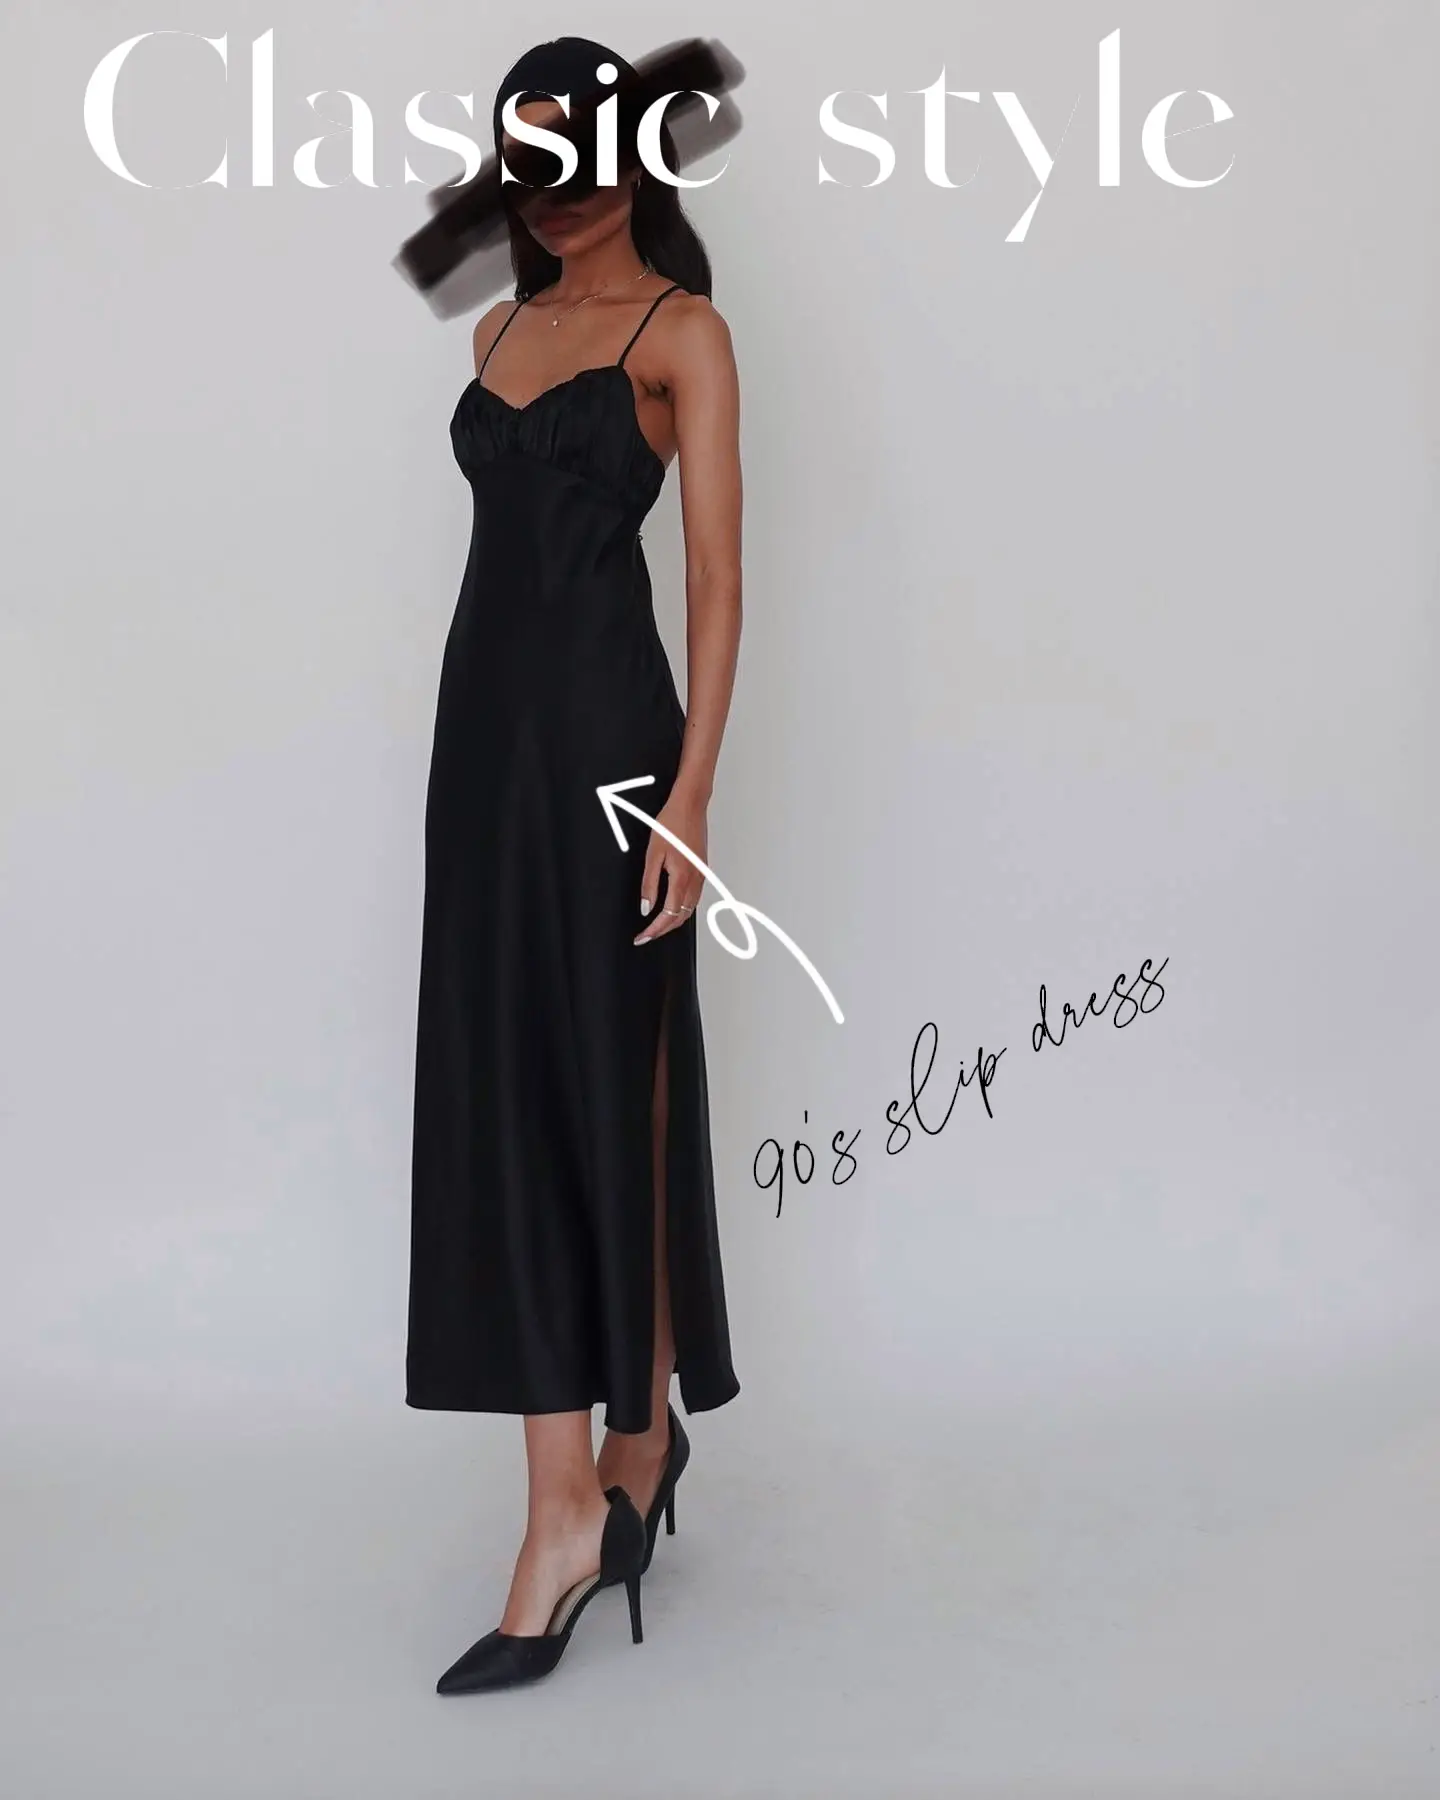 Classic Style: 90' slip dress, Gallery posted by Vidavinovalerie